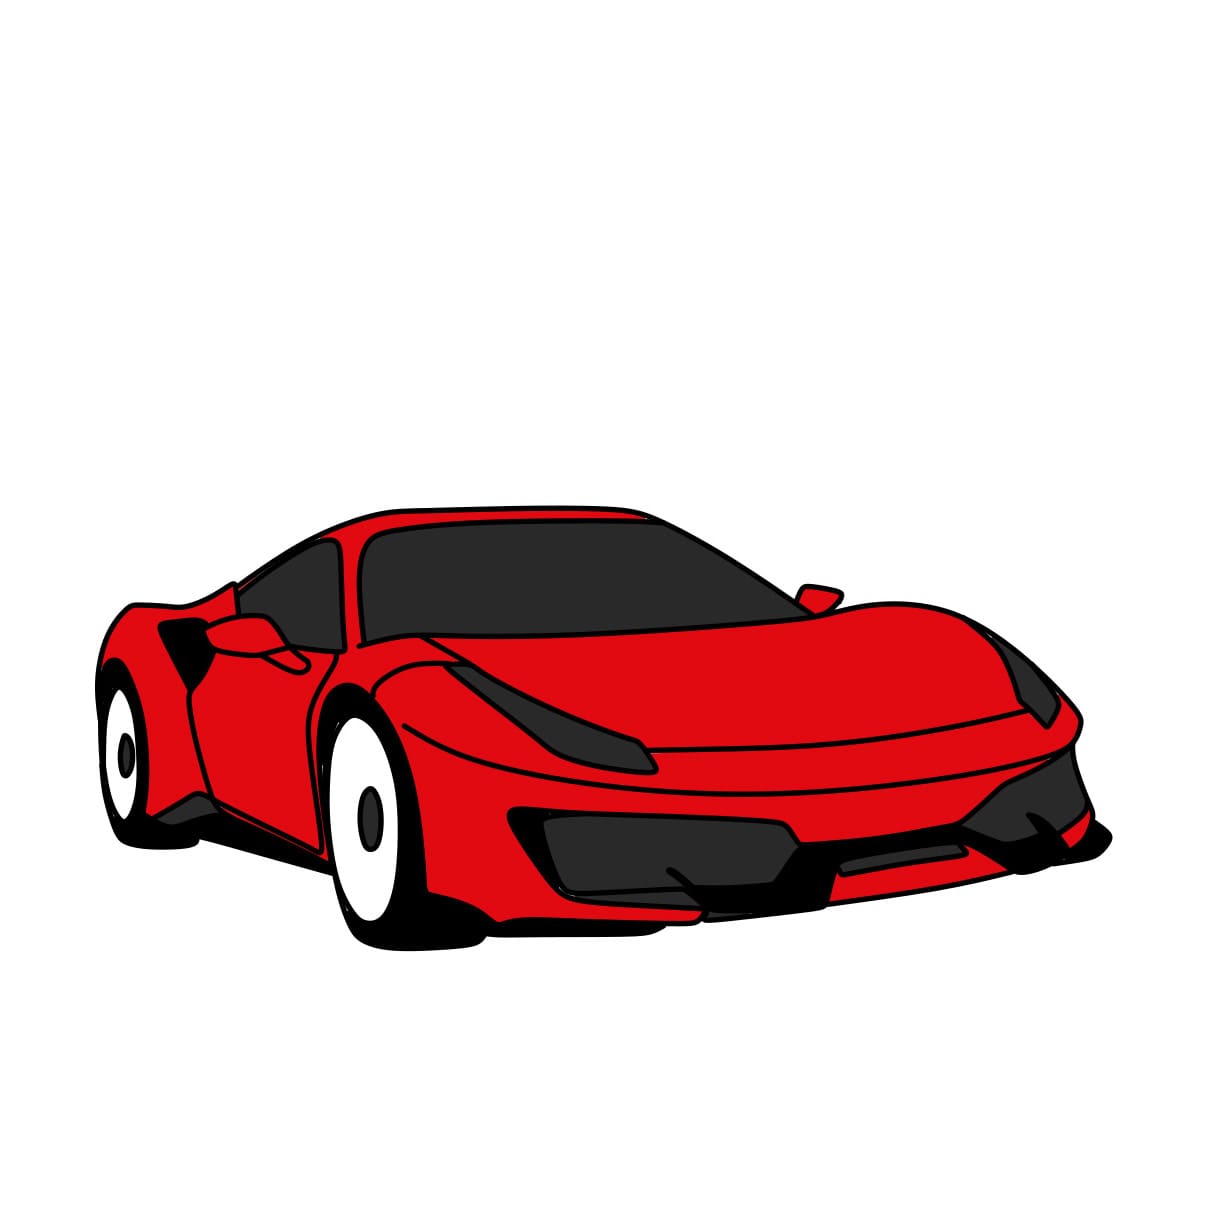 Cach-ve-xe-Ferrari-Buoc-5-6